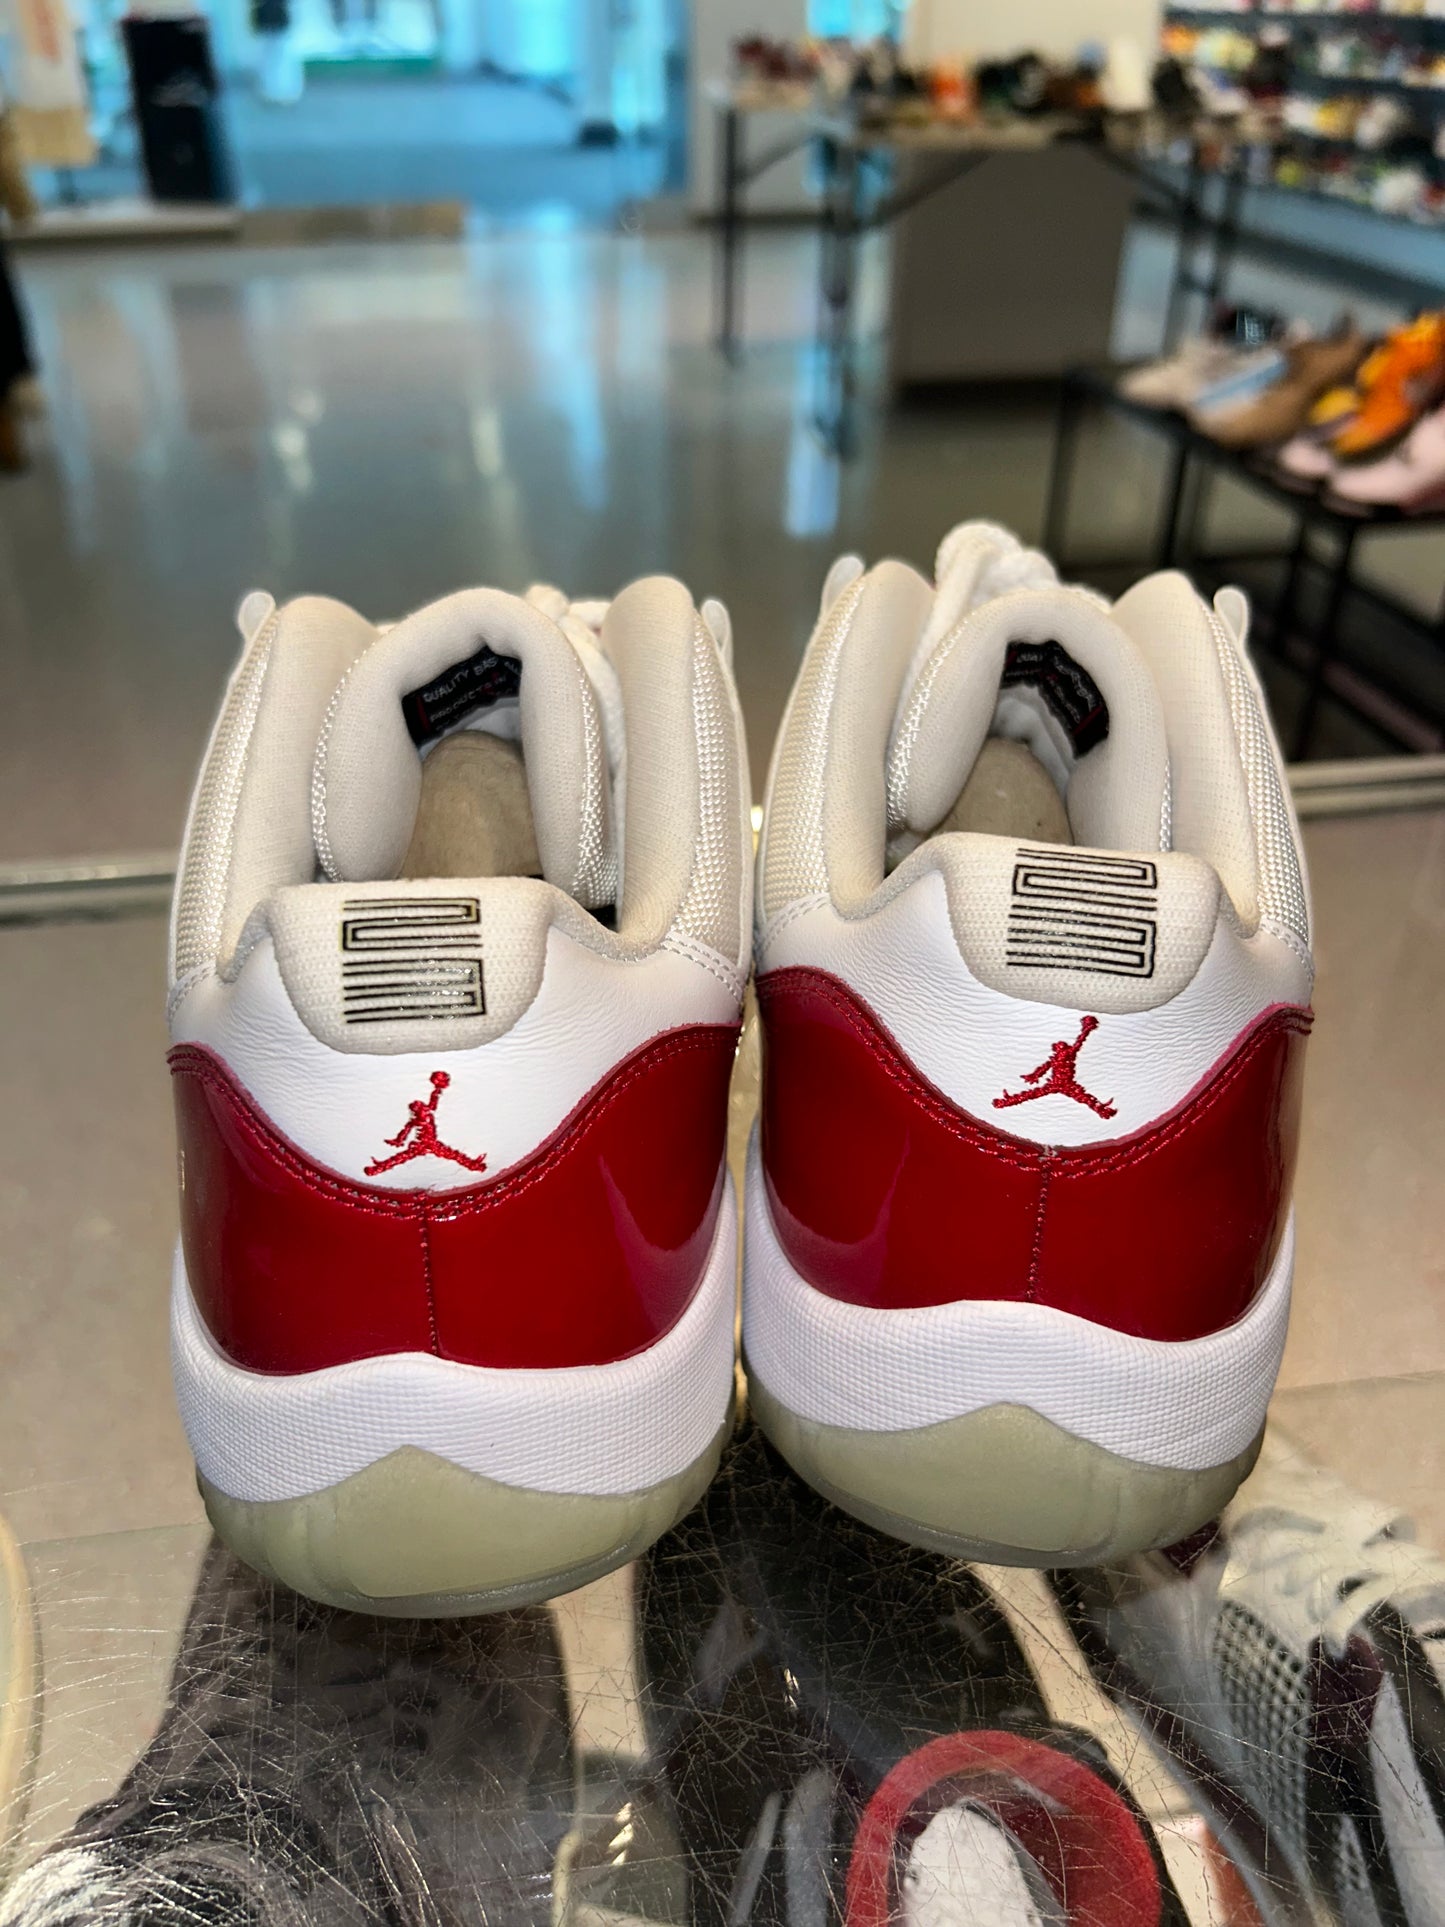 Size 12 Air Jordan 11 Low “Cherry” Brand New (Mall)